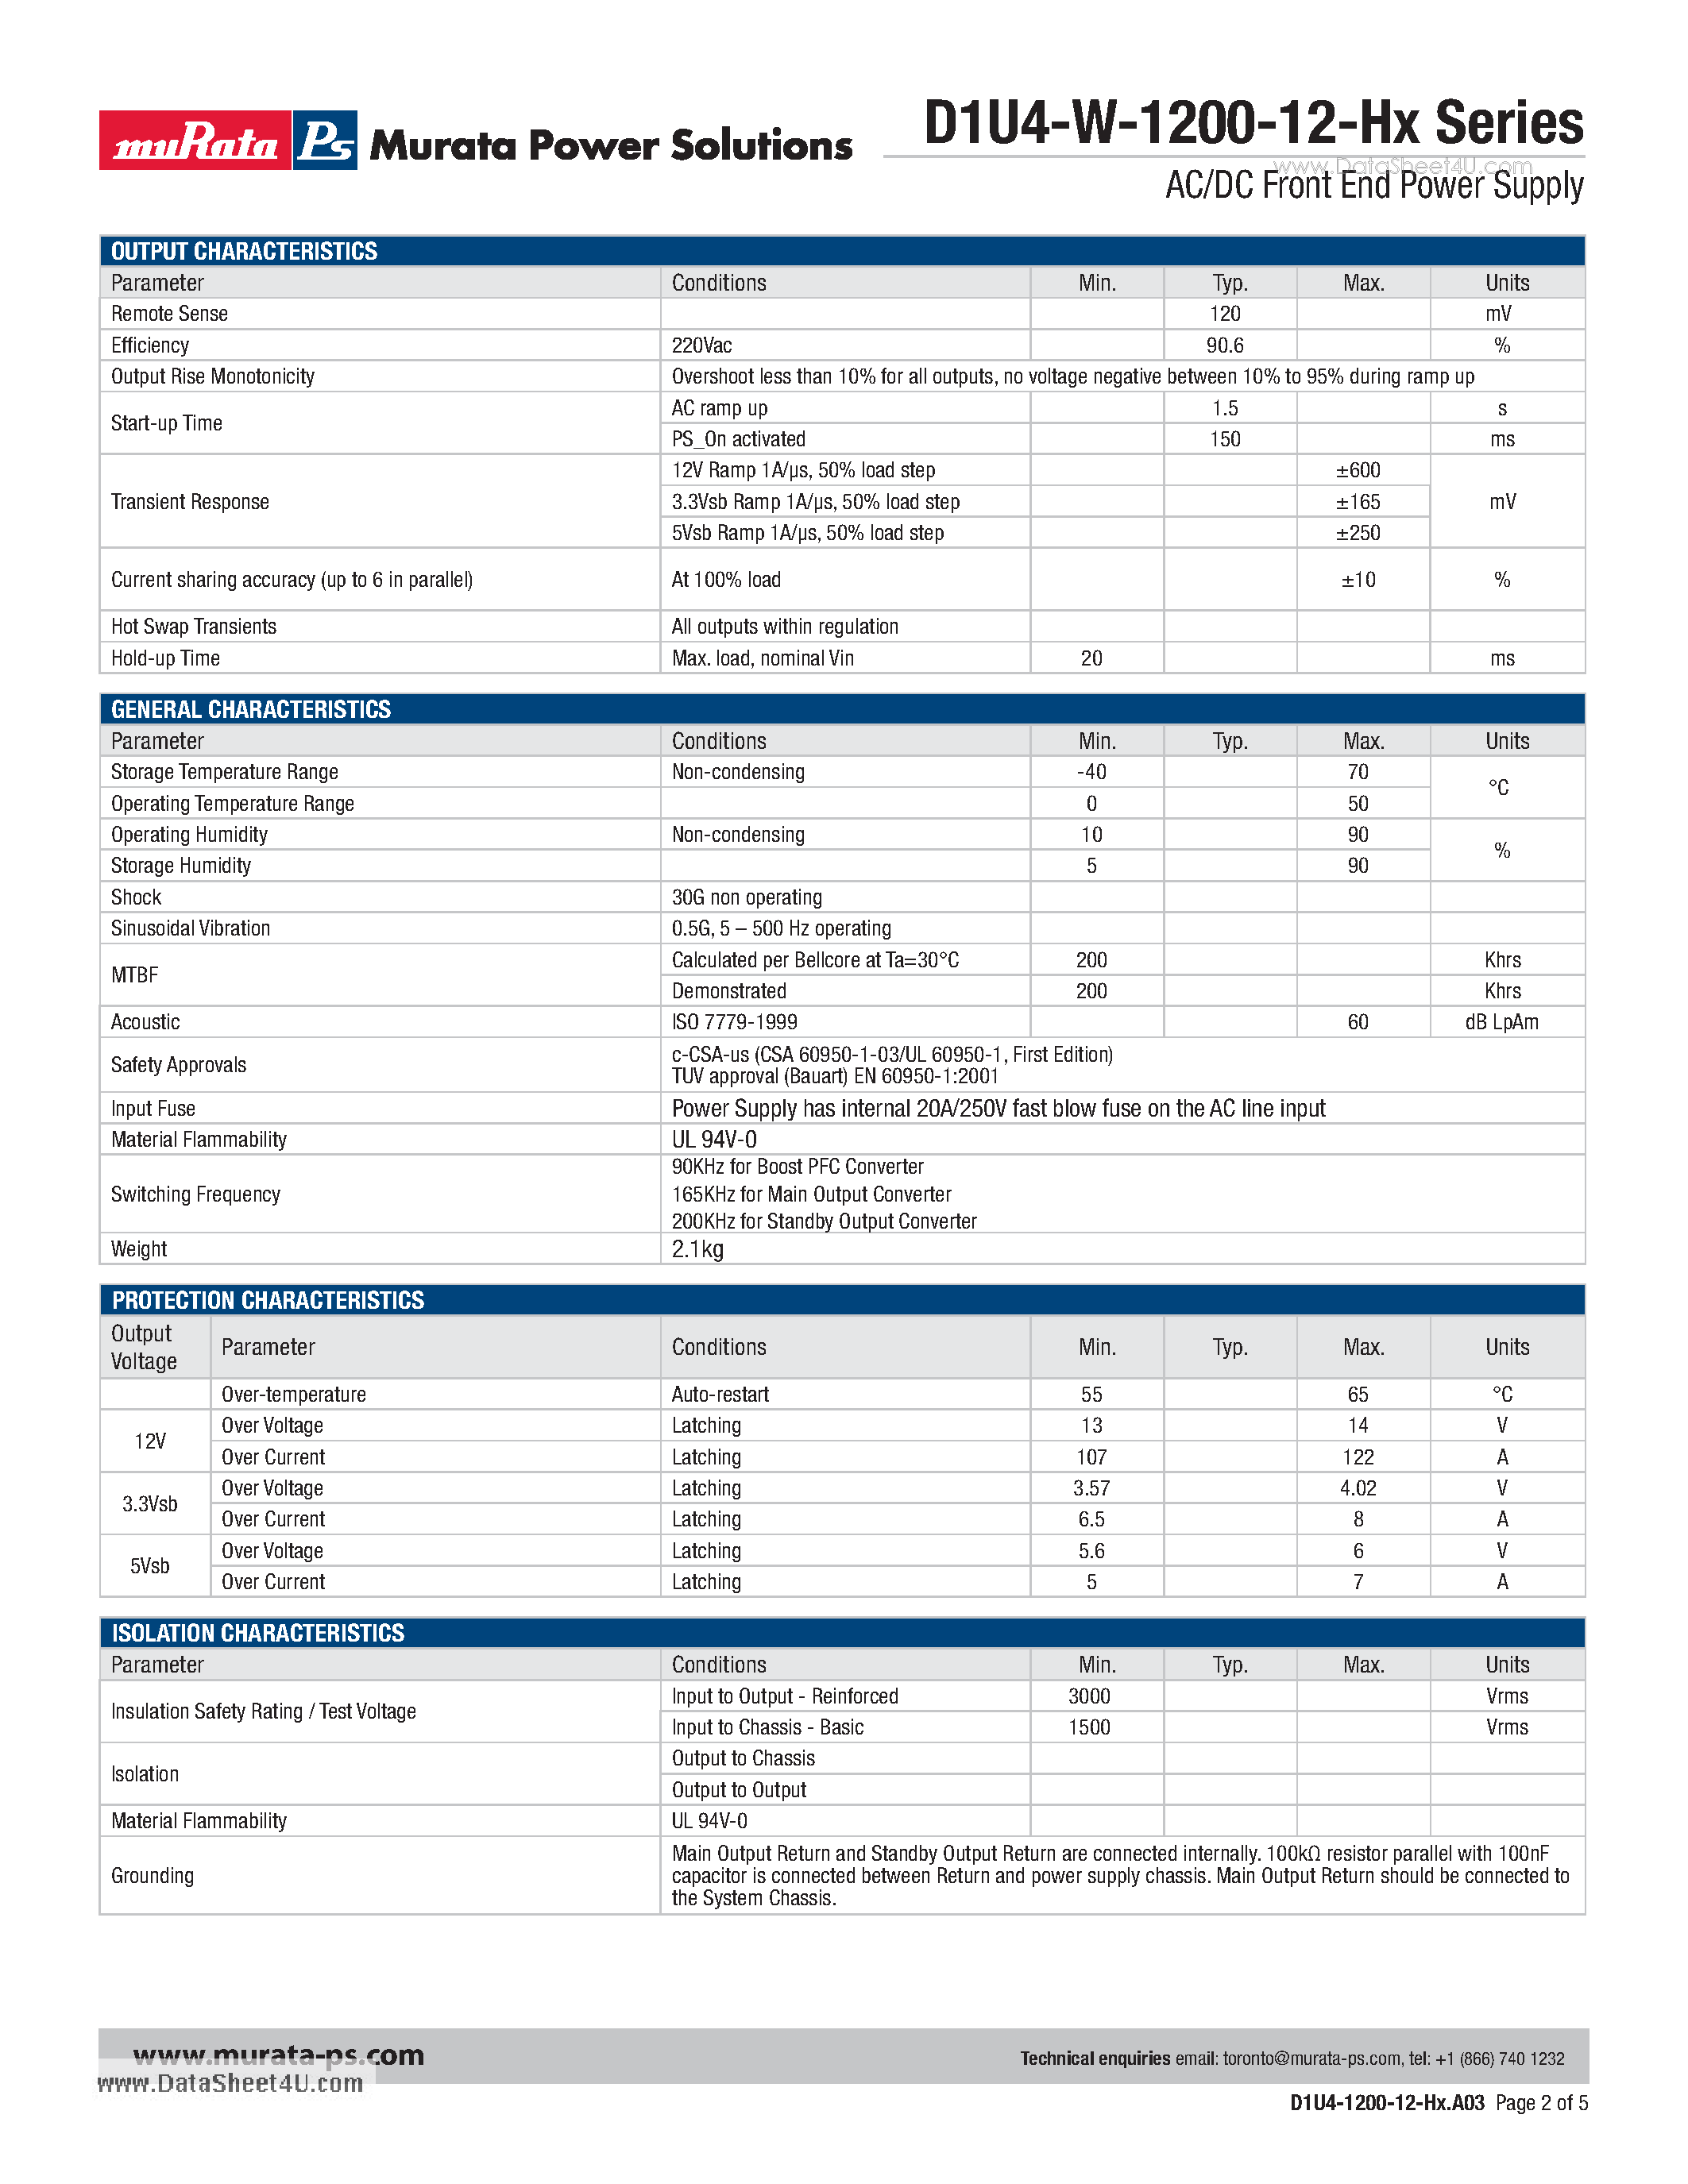 Datasheet D1U4-W-1200-12-Hx - AC/DC Front End Power Supply page 2